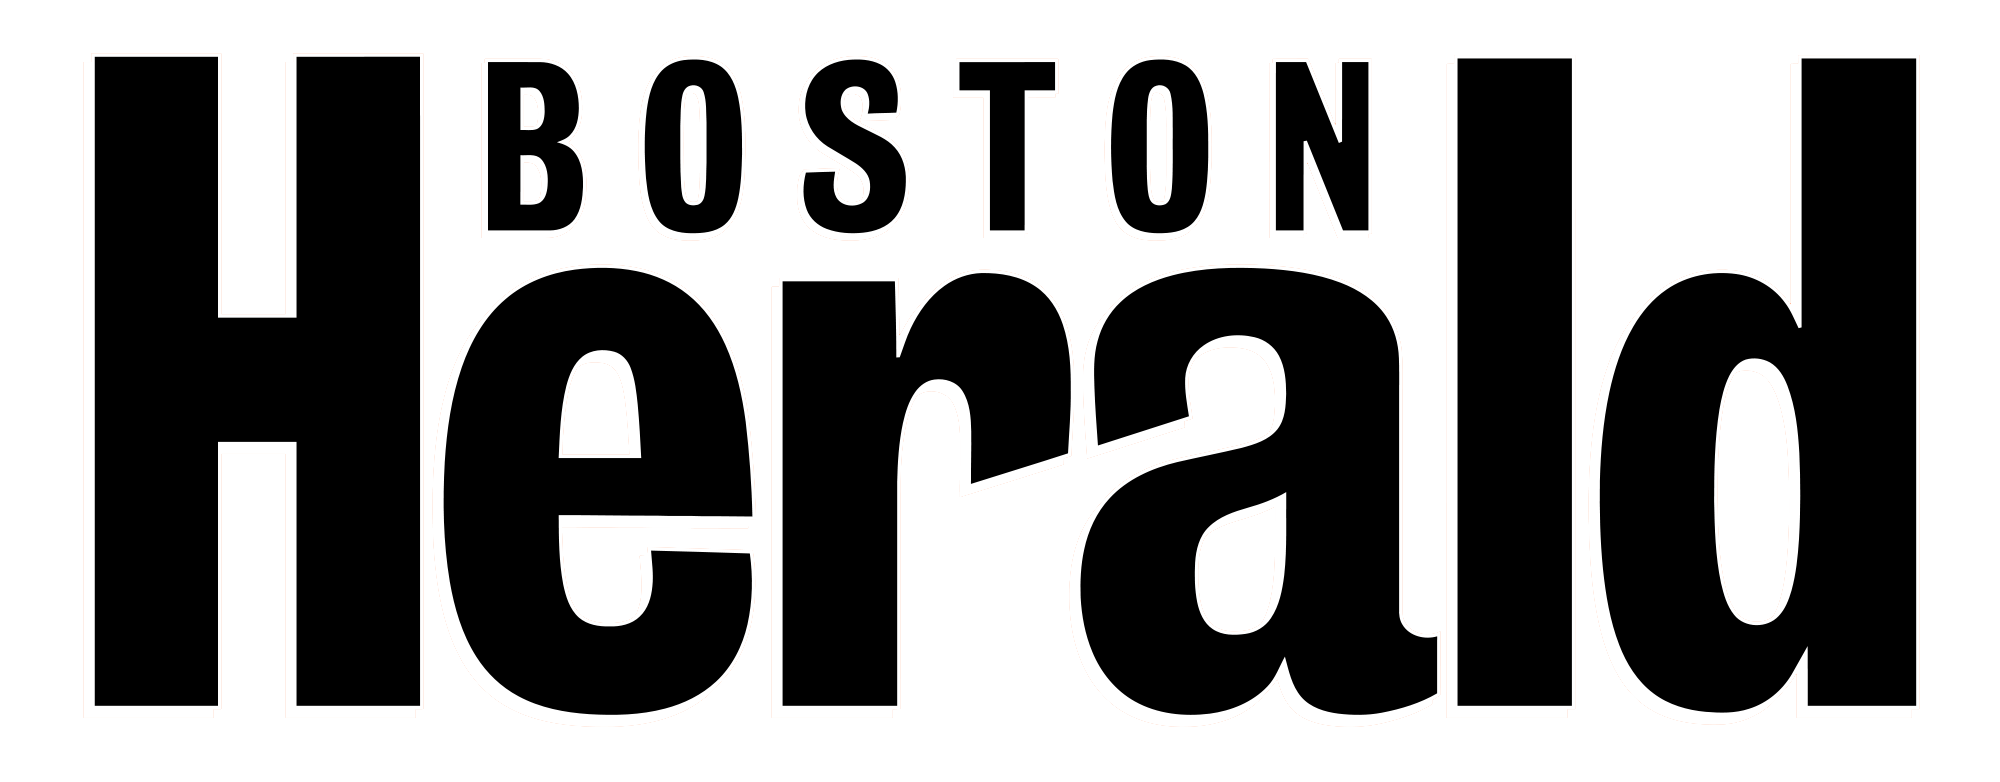 Bostonherald.com Logo - Digital First Media to Buy Boston Herald for $11.9 Million ...